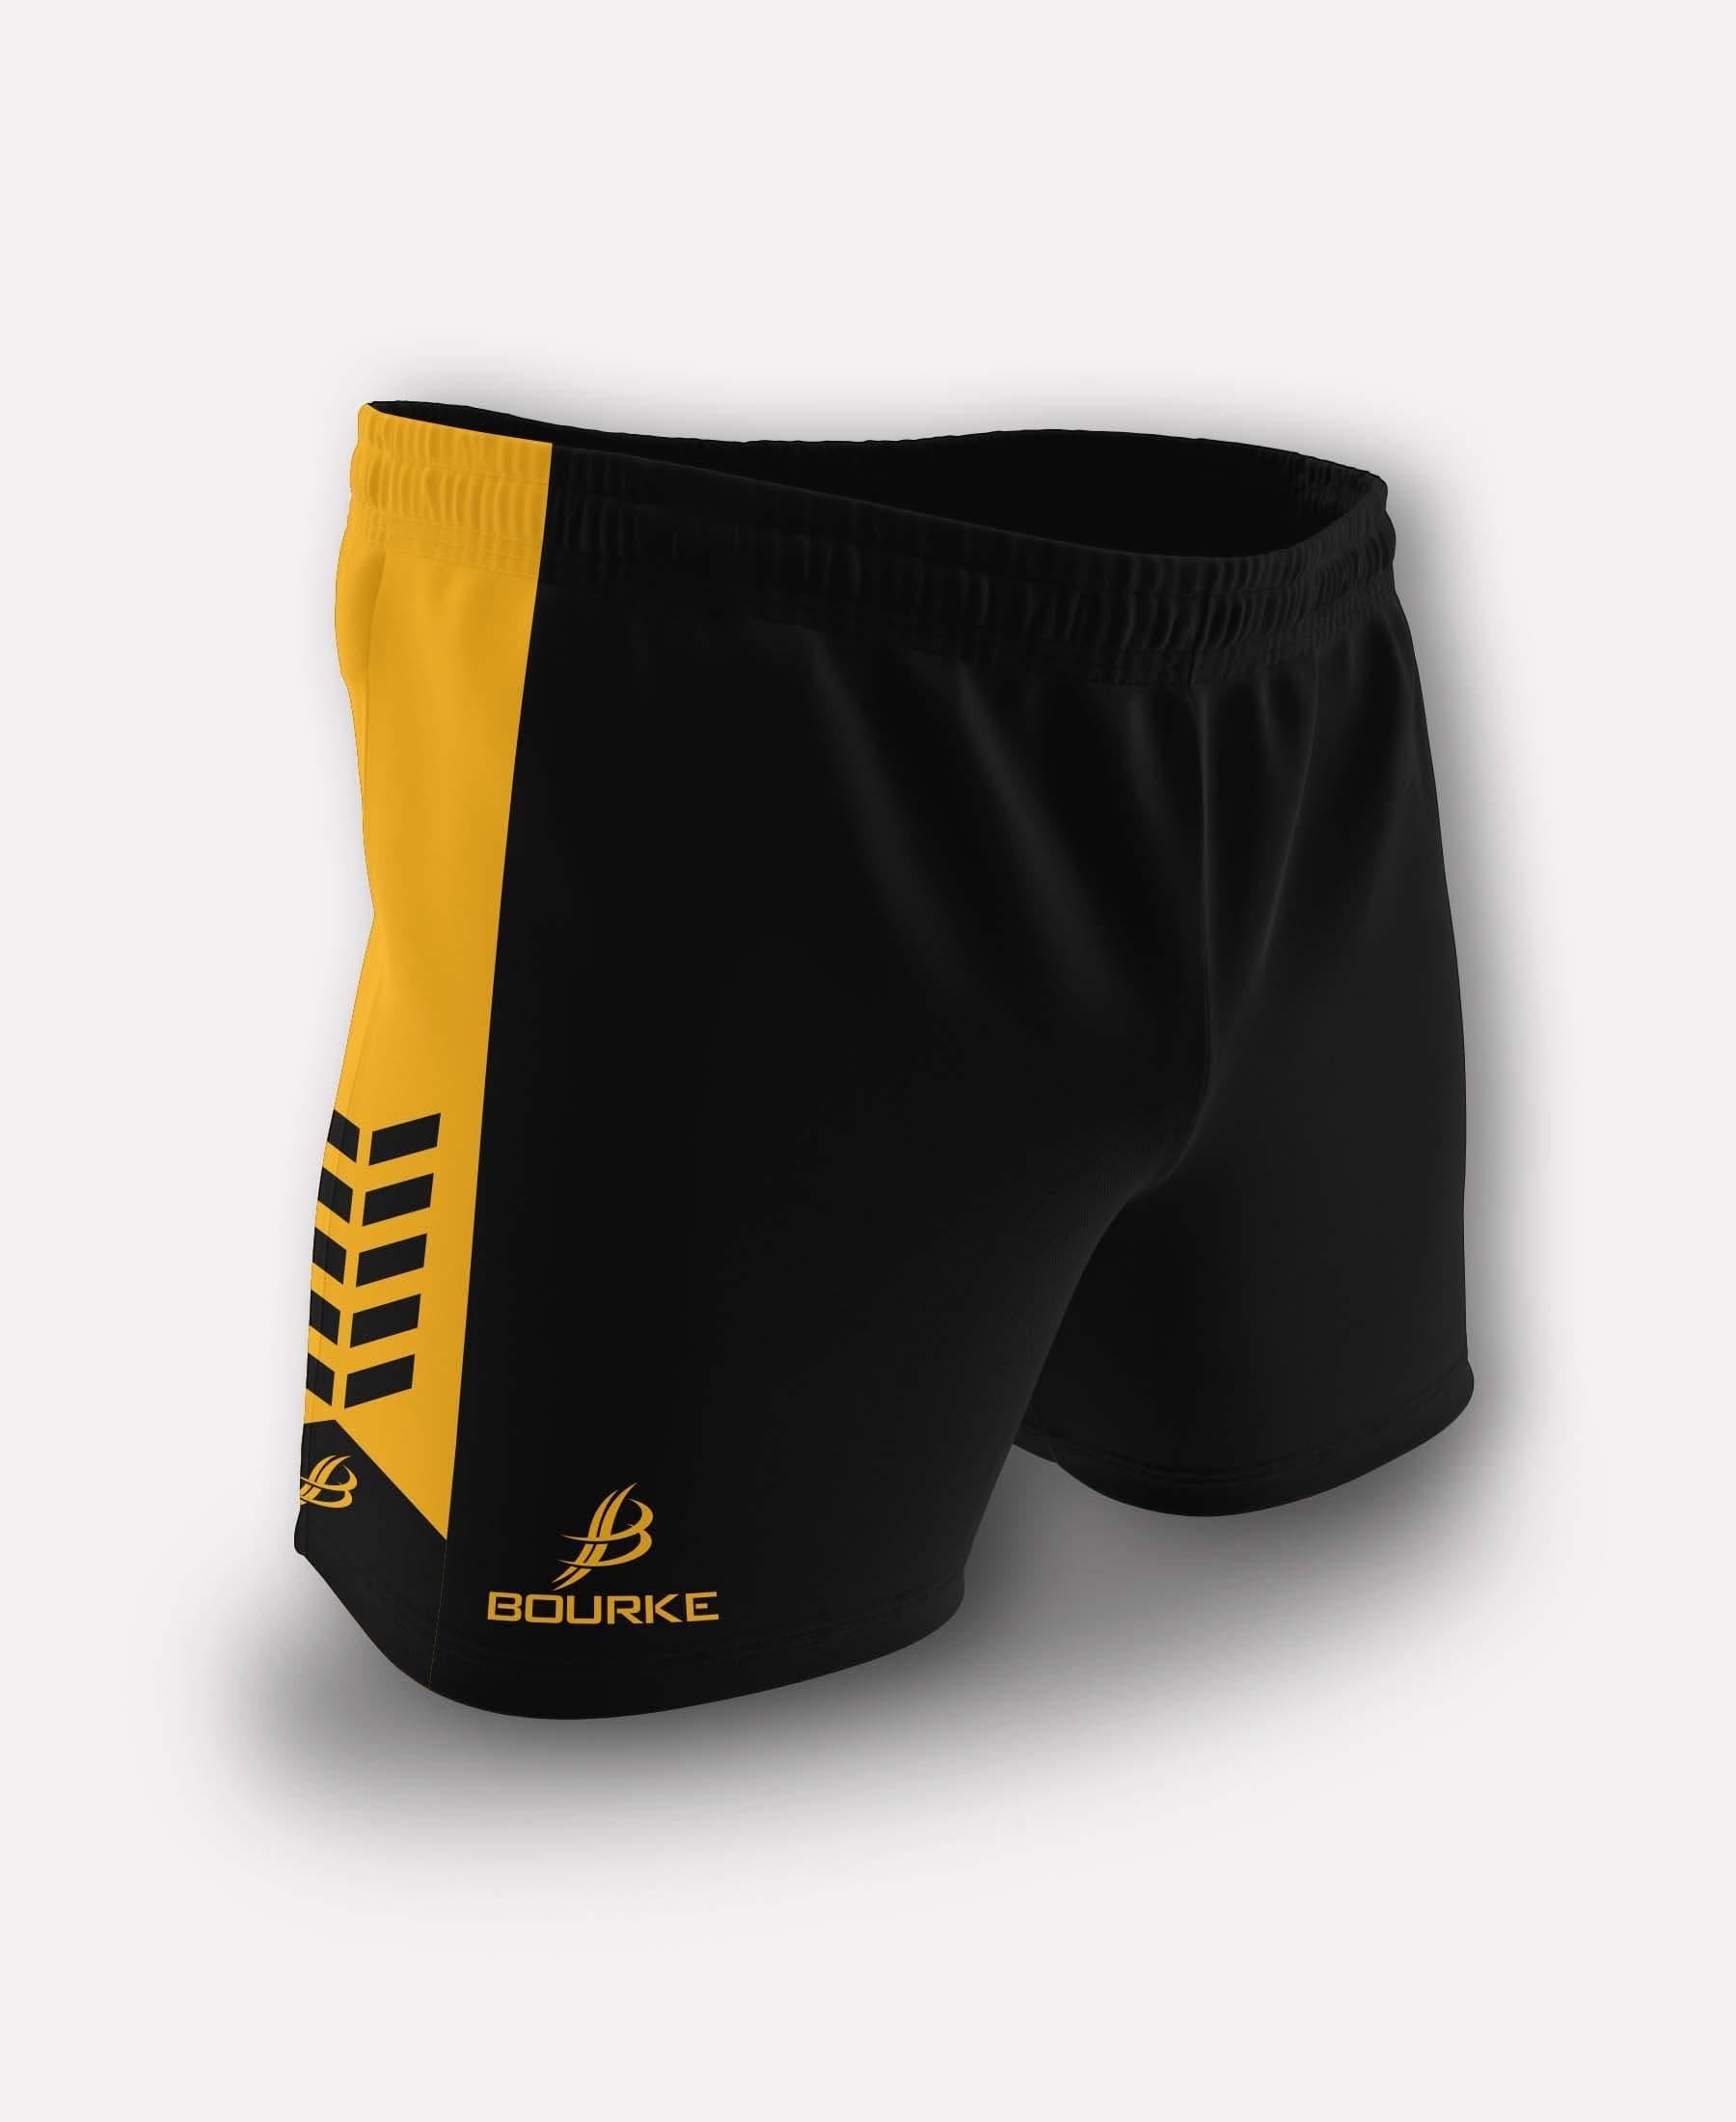 Chevron Adult Shorts (Black/Amber) - Bourke Sports Limited